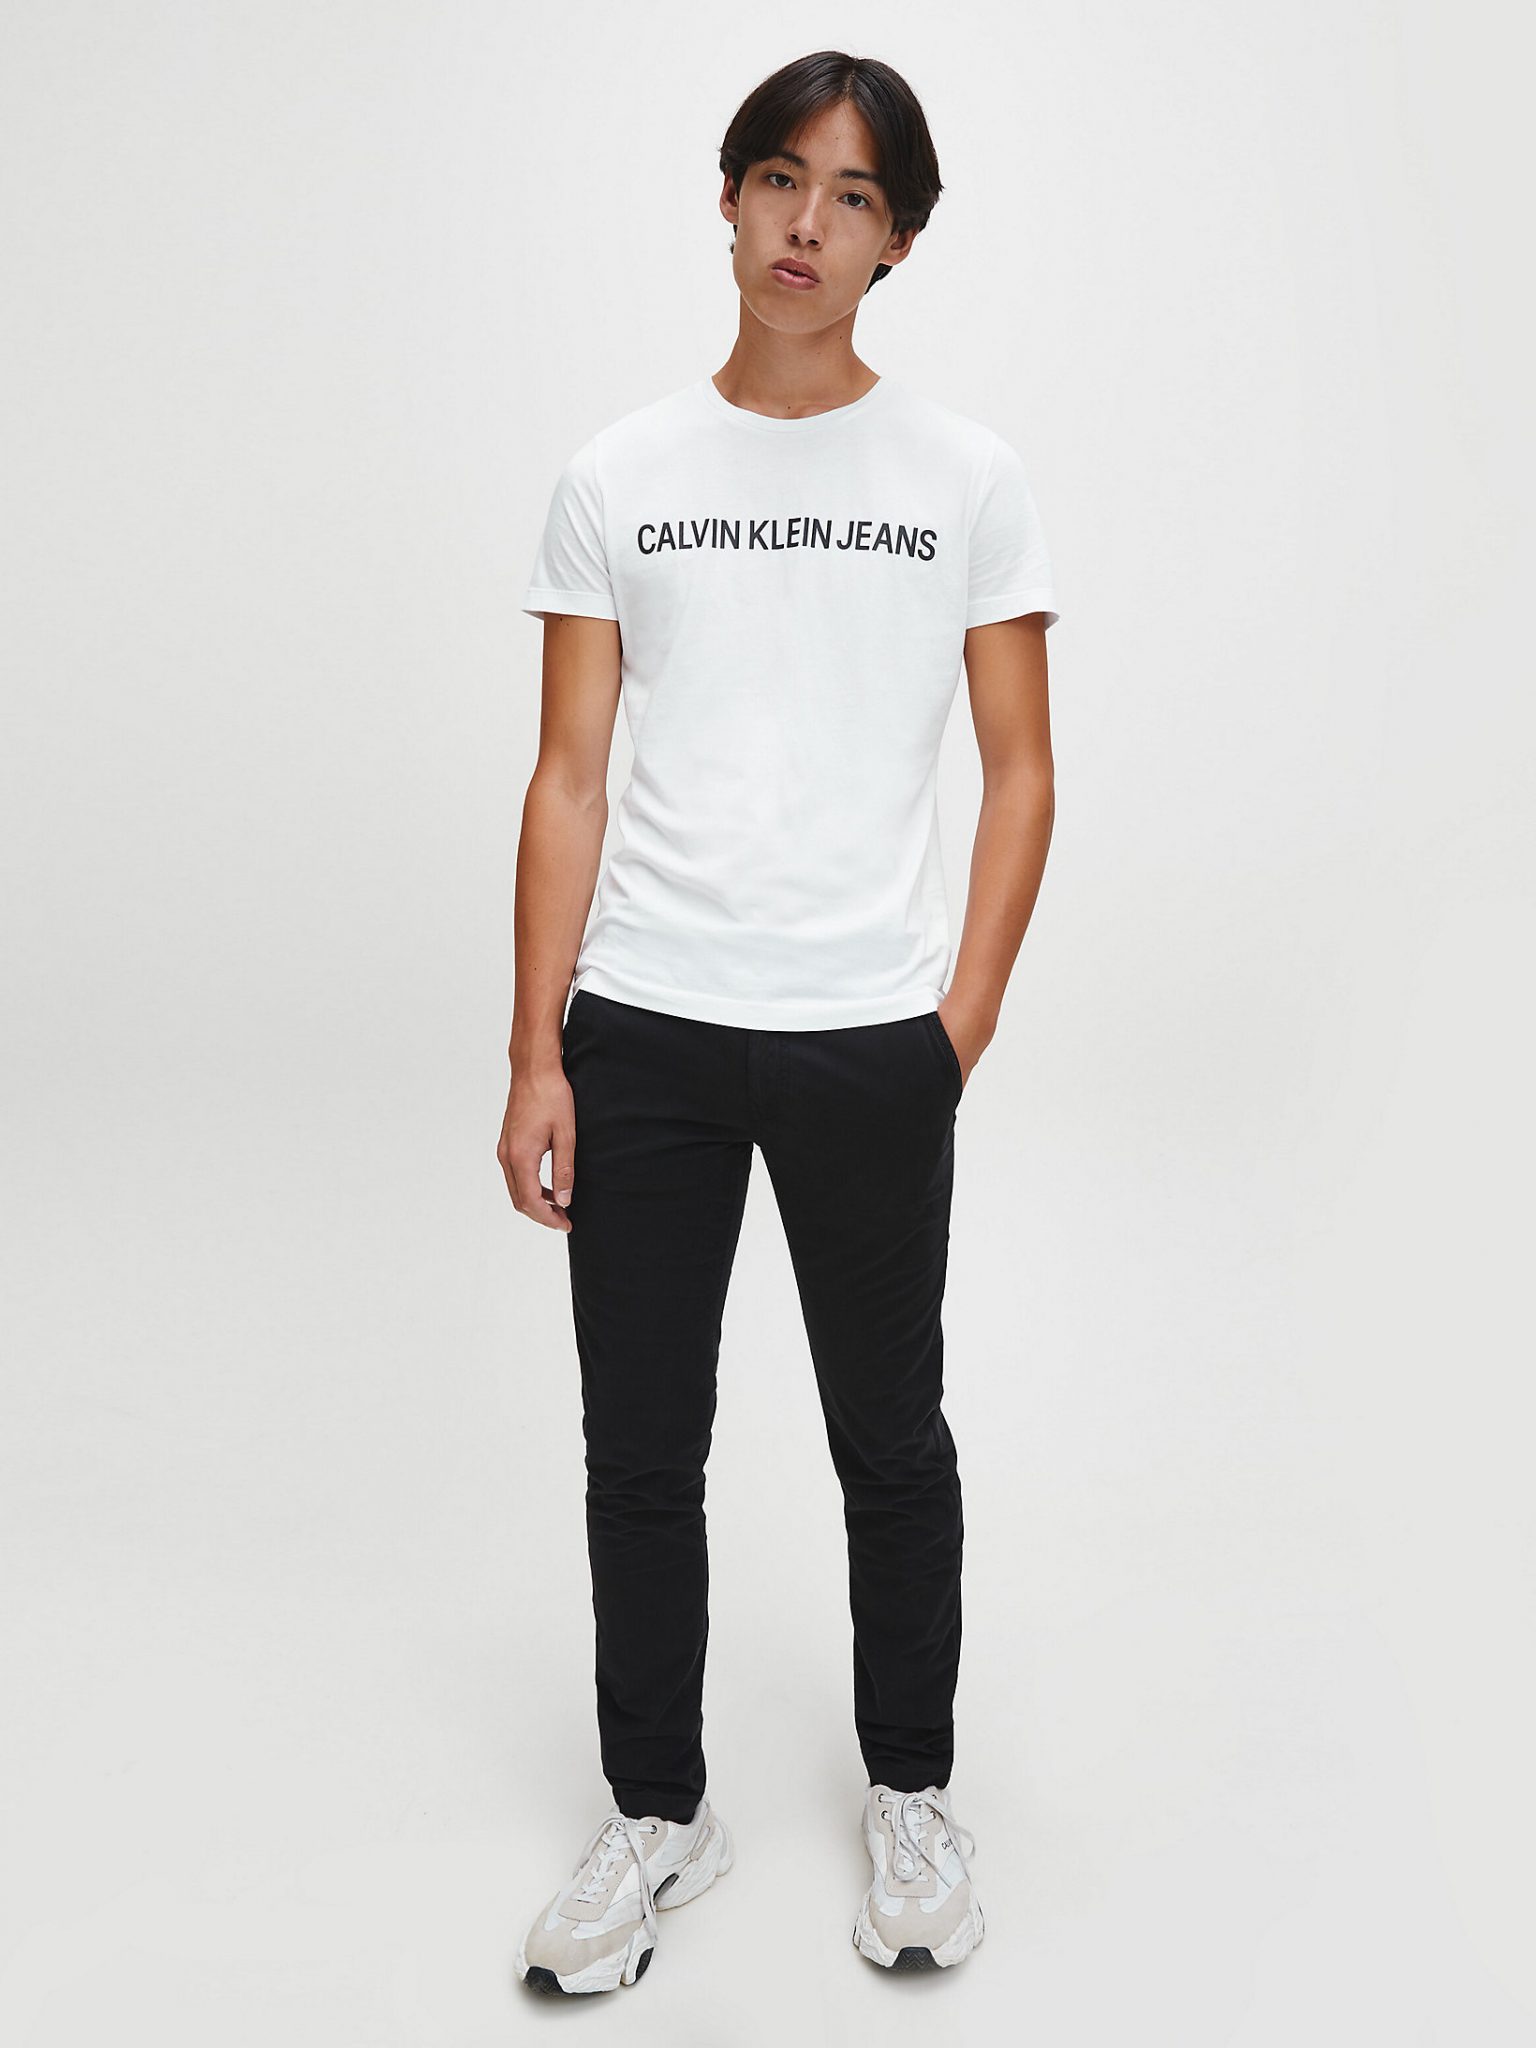 Buy Calvin Klein Institutional logo White - Fashion Bright Scandinavian T-shirt Store